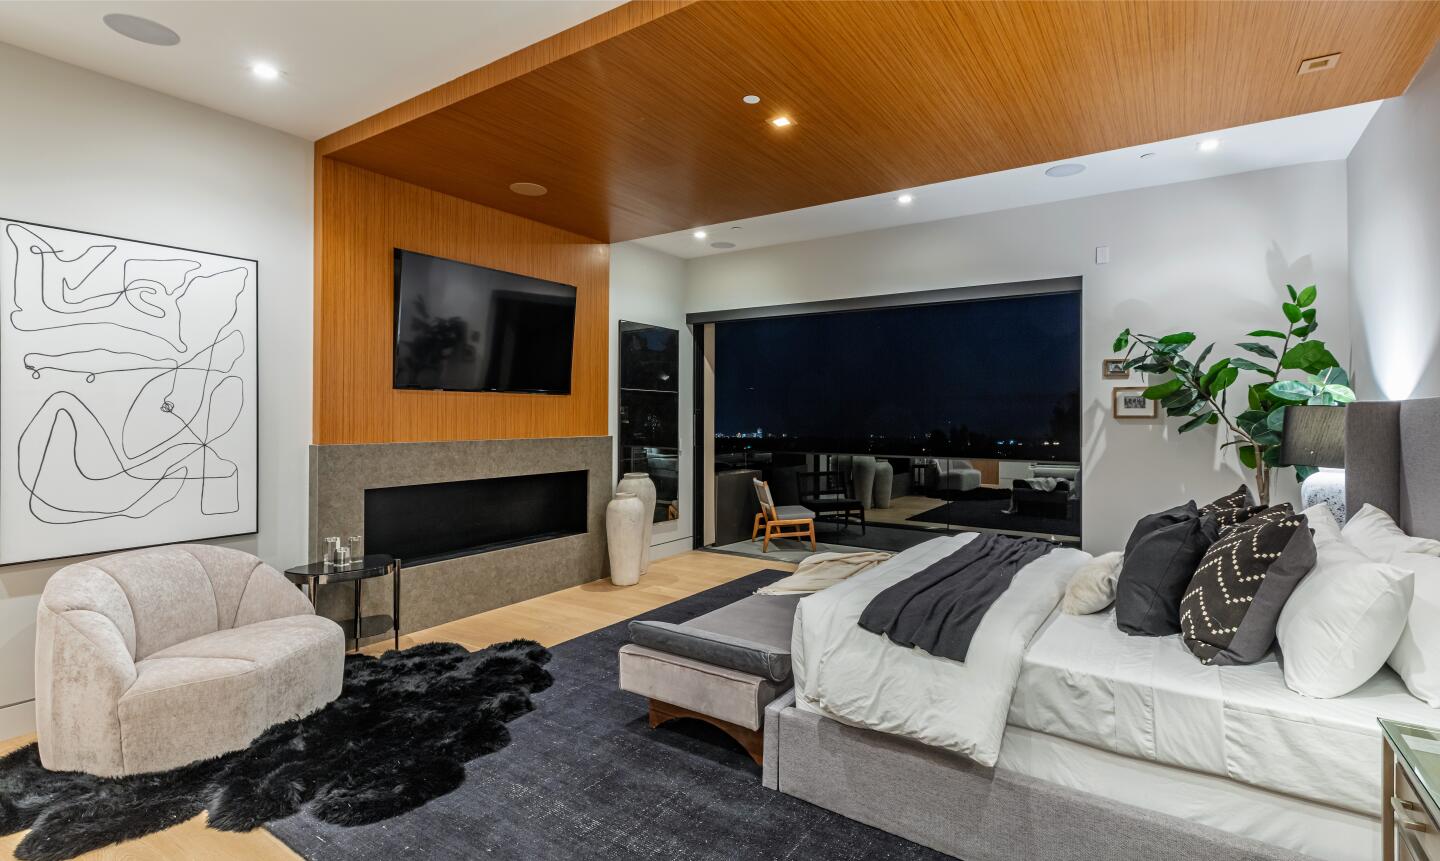 The bedroom has furniture, wood floor, built-in TV and a big window.